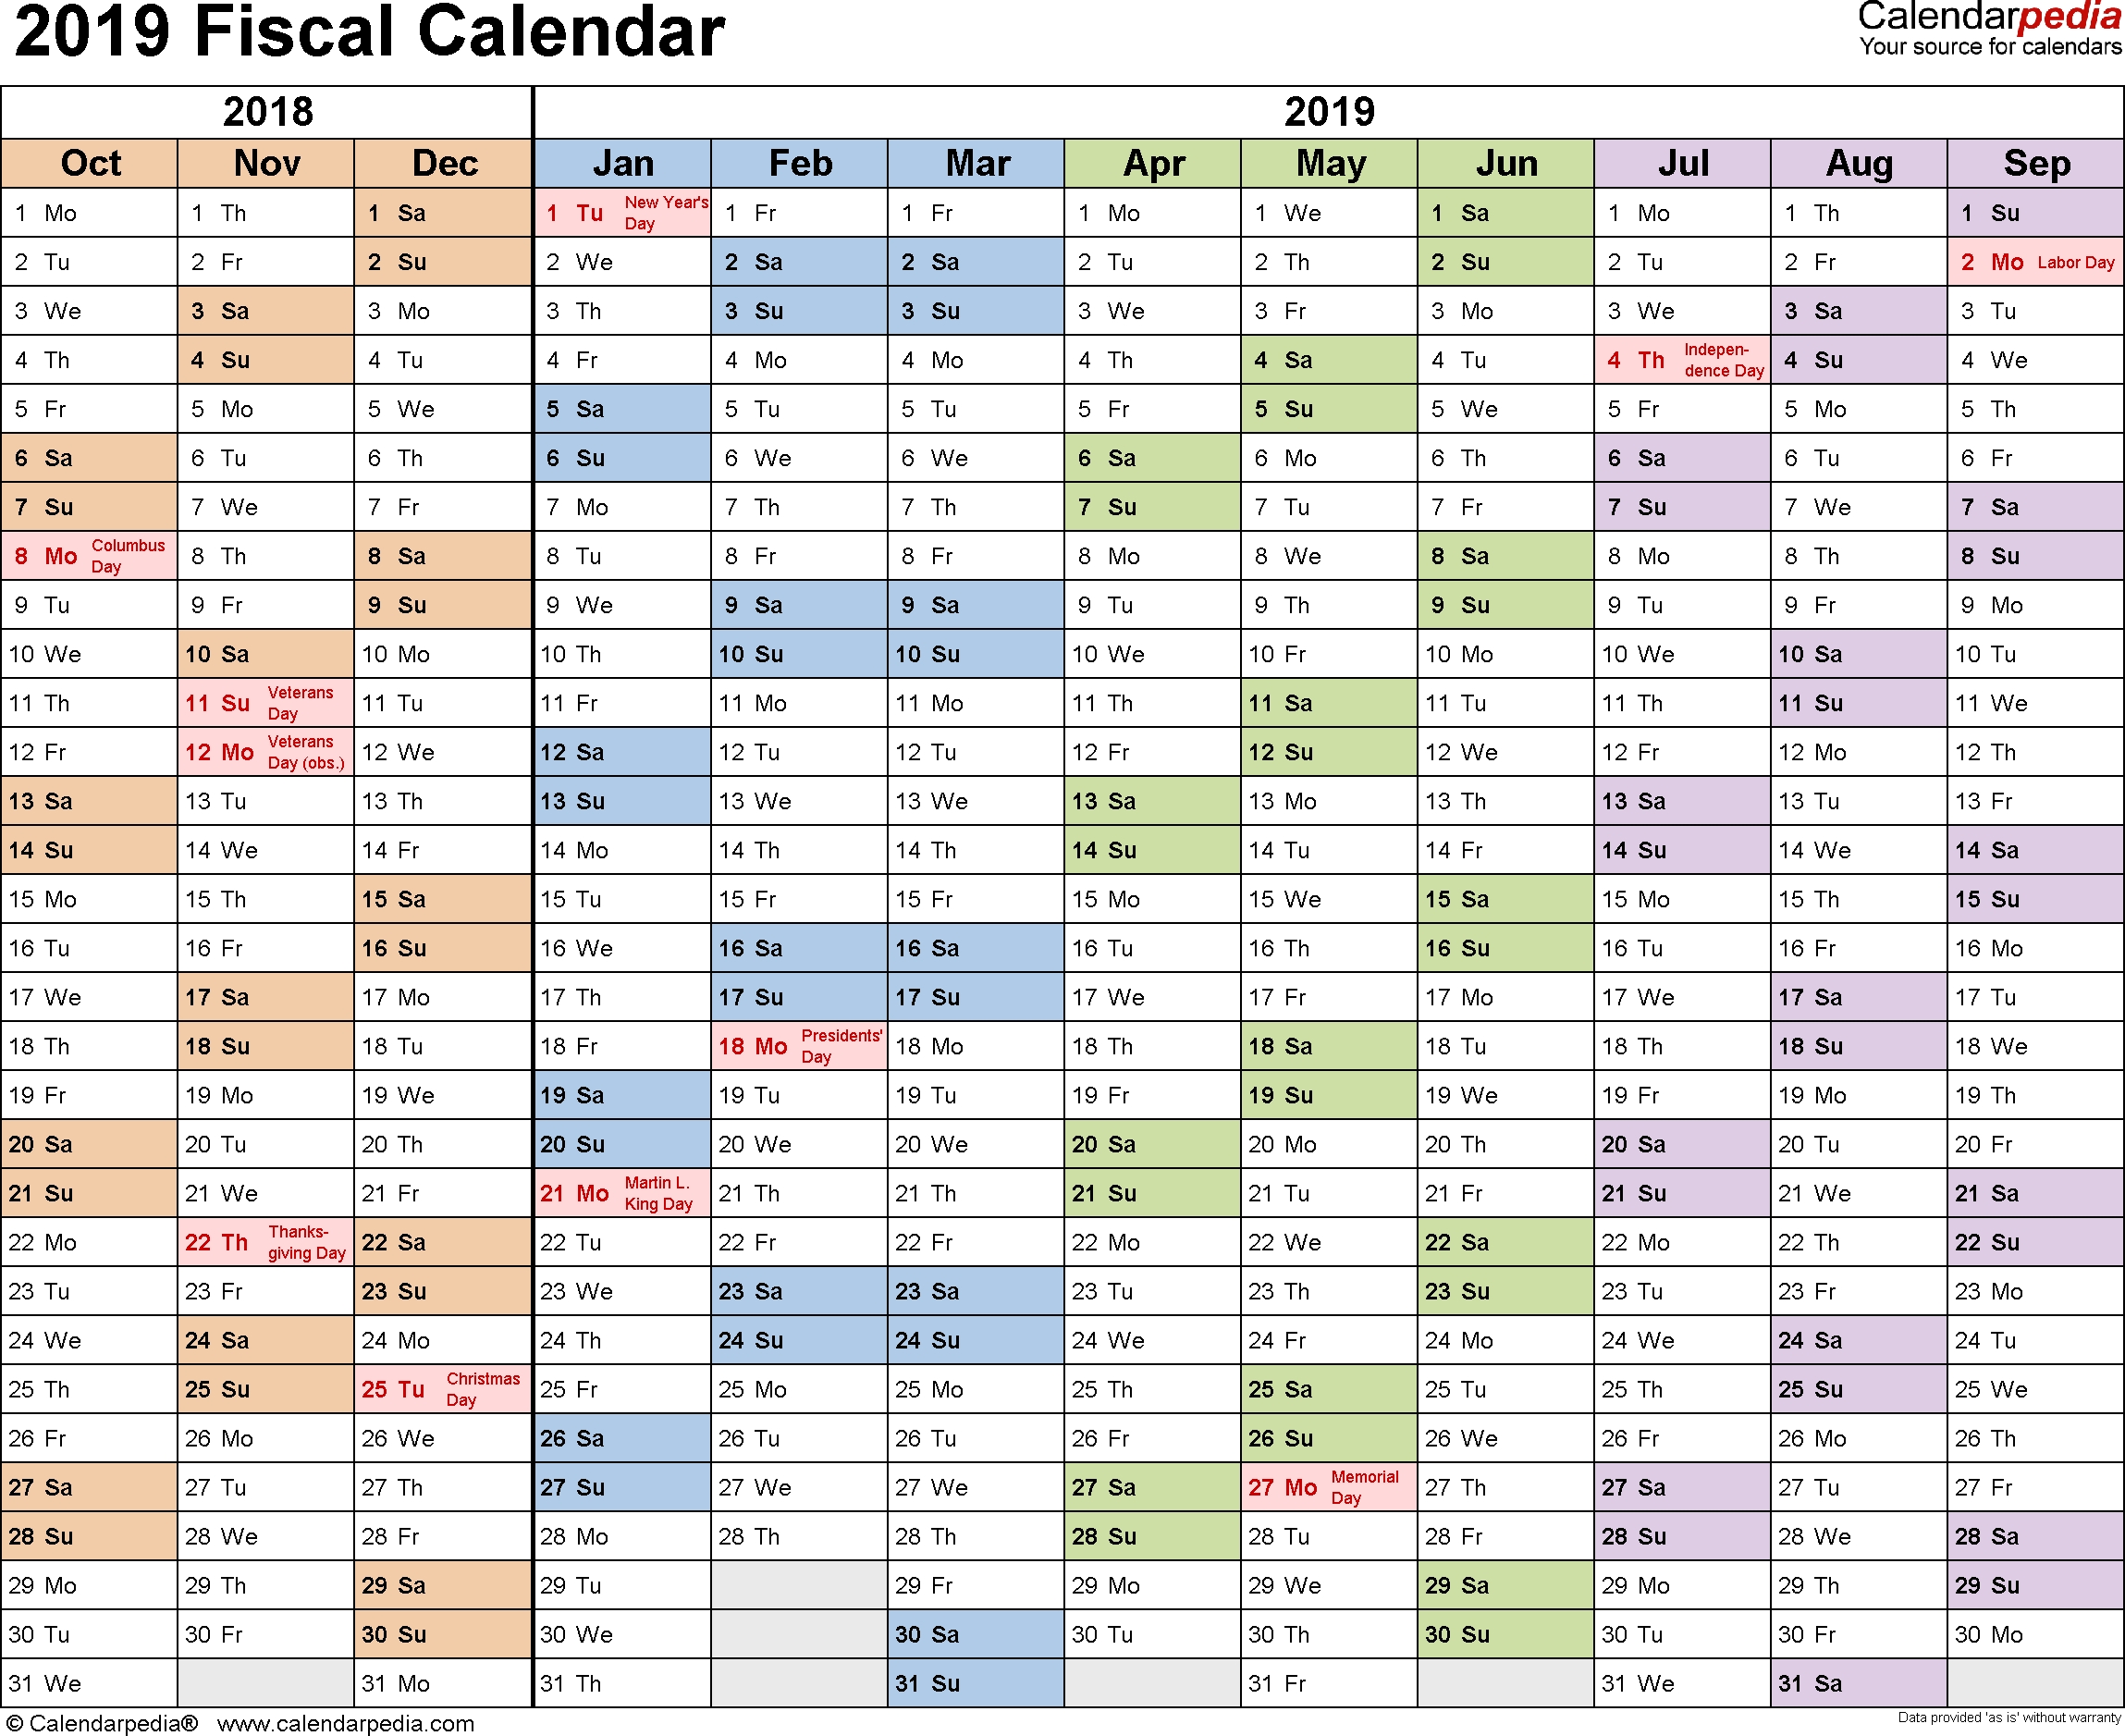 Fiscal Calendars 2019 - Free Printable Word Templates regarding Financial Year Week Numbers 2019